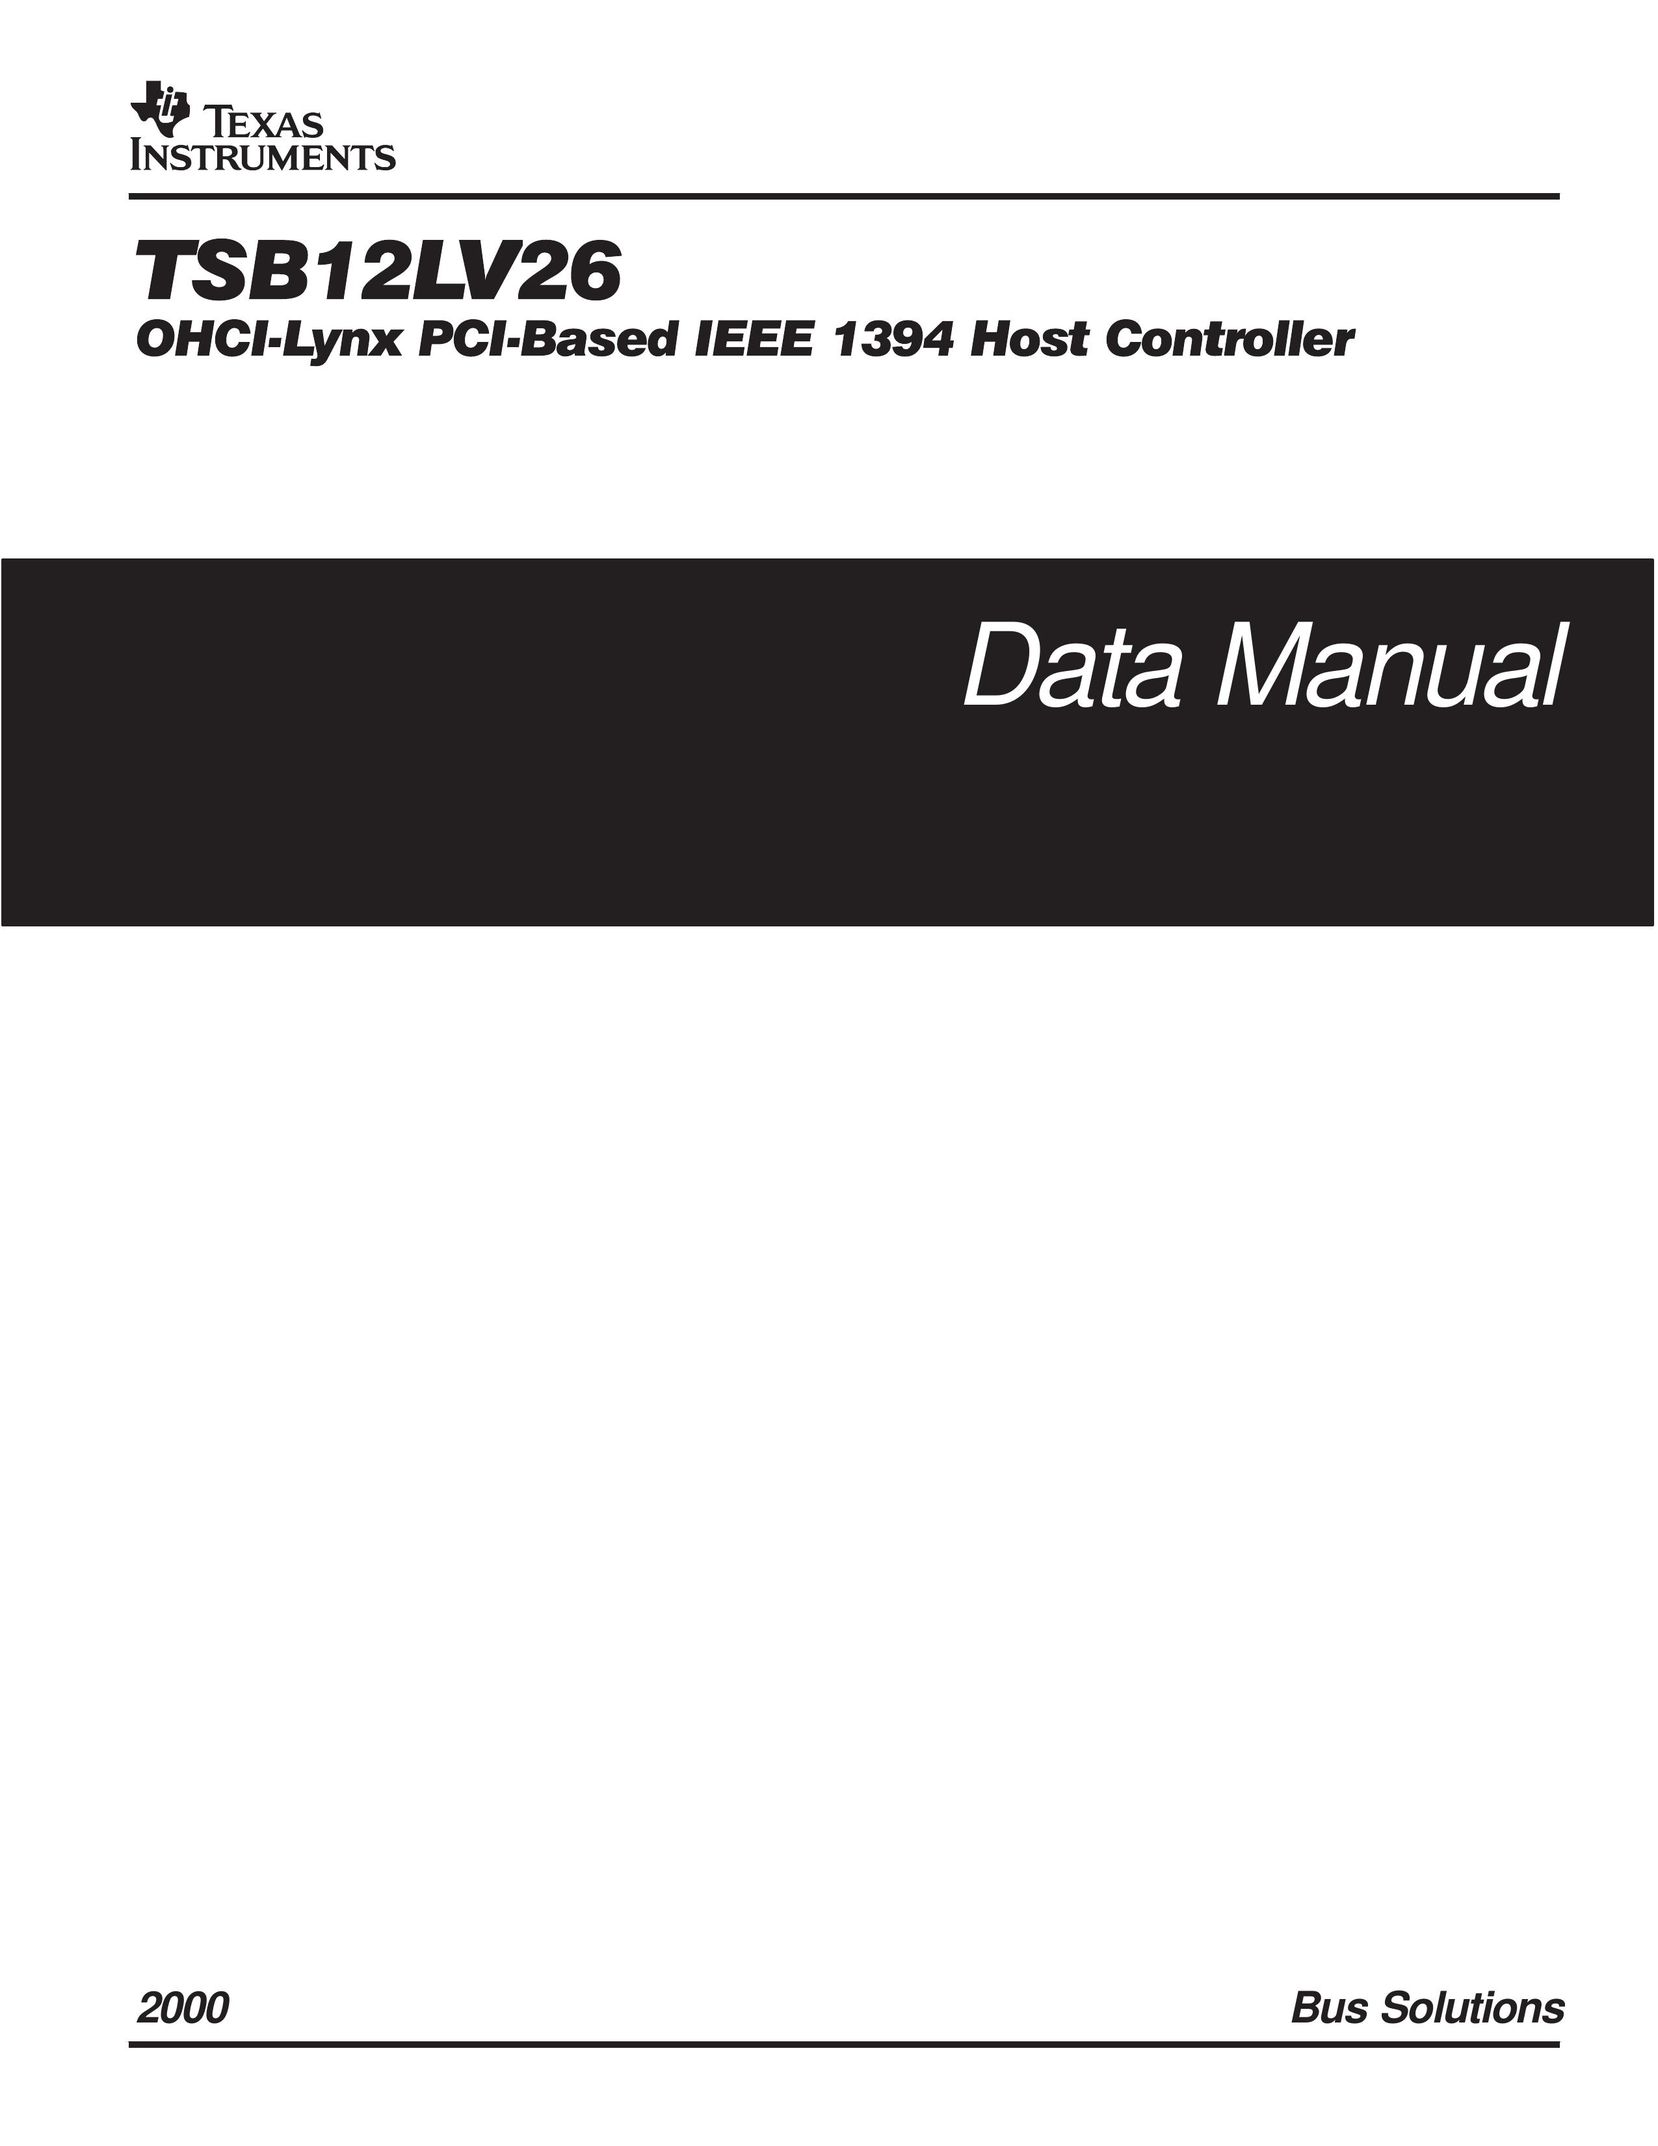 Texas Instruments TSB12LV26 Network Card User Manual